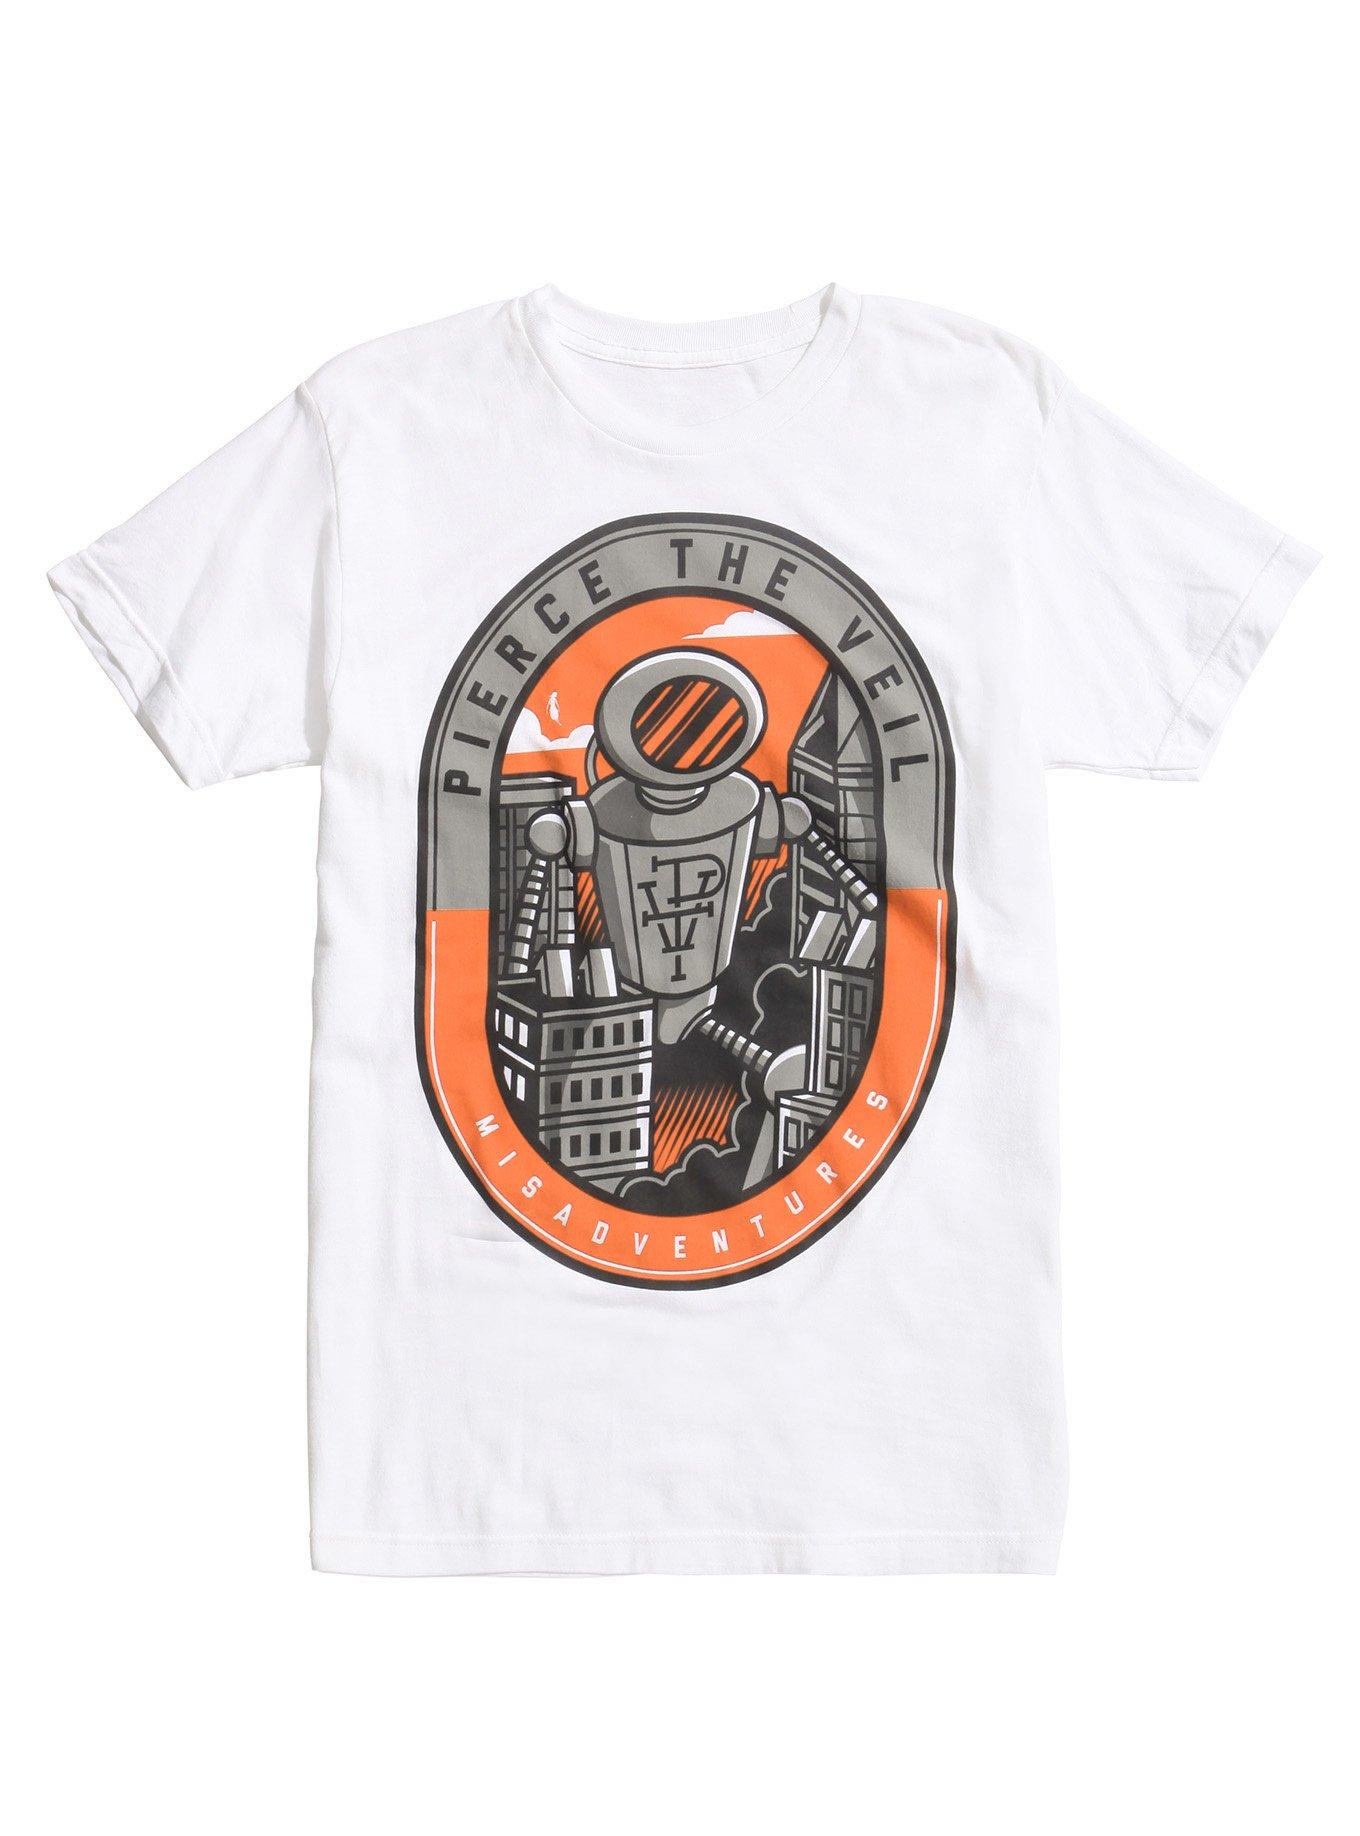 Pierce The Veil Misadventures Robot T-Shirt | Hot Topic